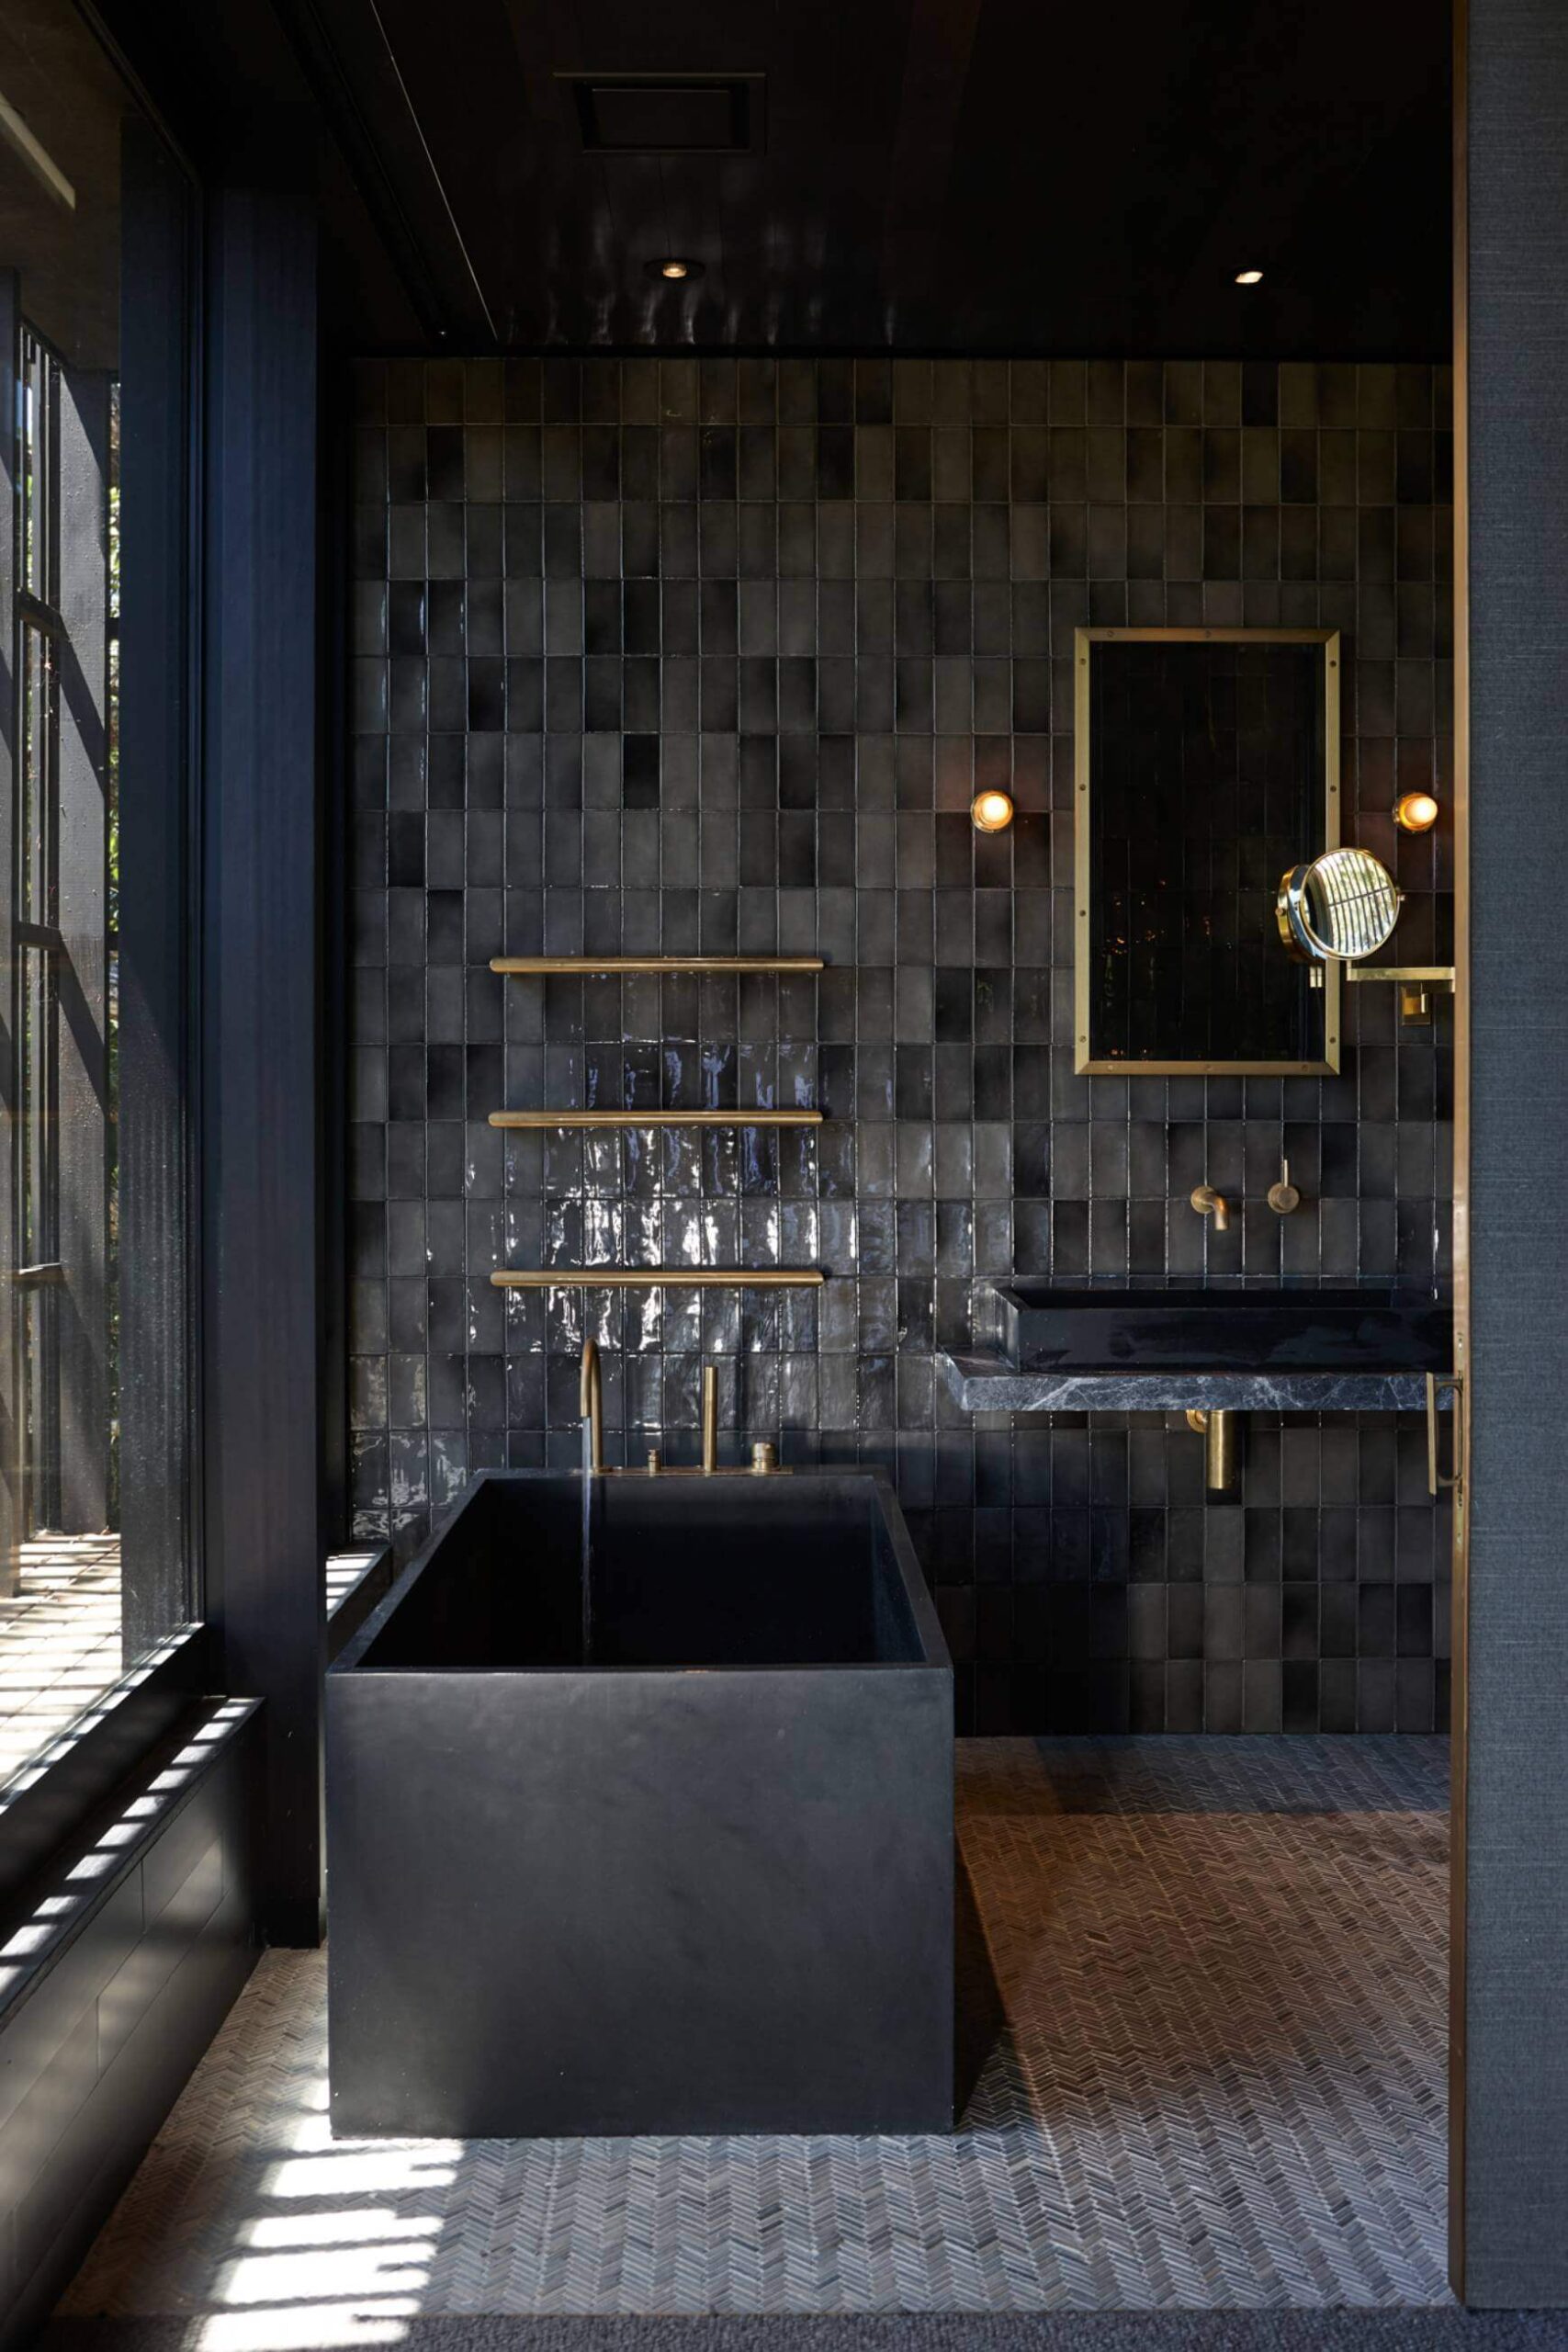 https://www.thenordroom.com/wp-content/uploads/2022/03/black-bathroom-design-inspiration-square-bath-nordroom-scaled.jpg